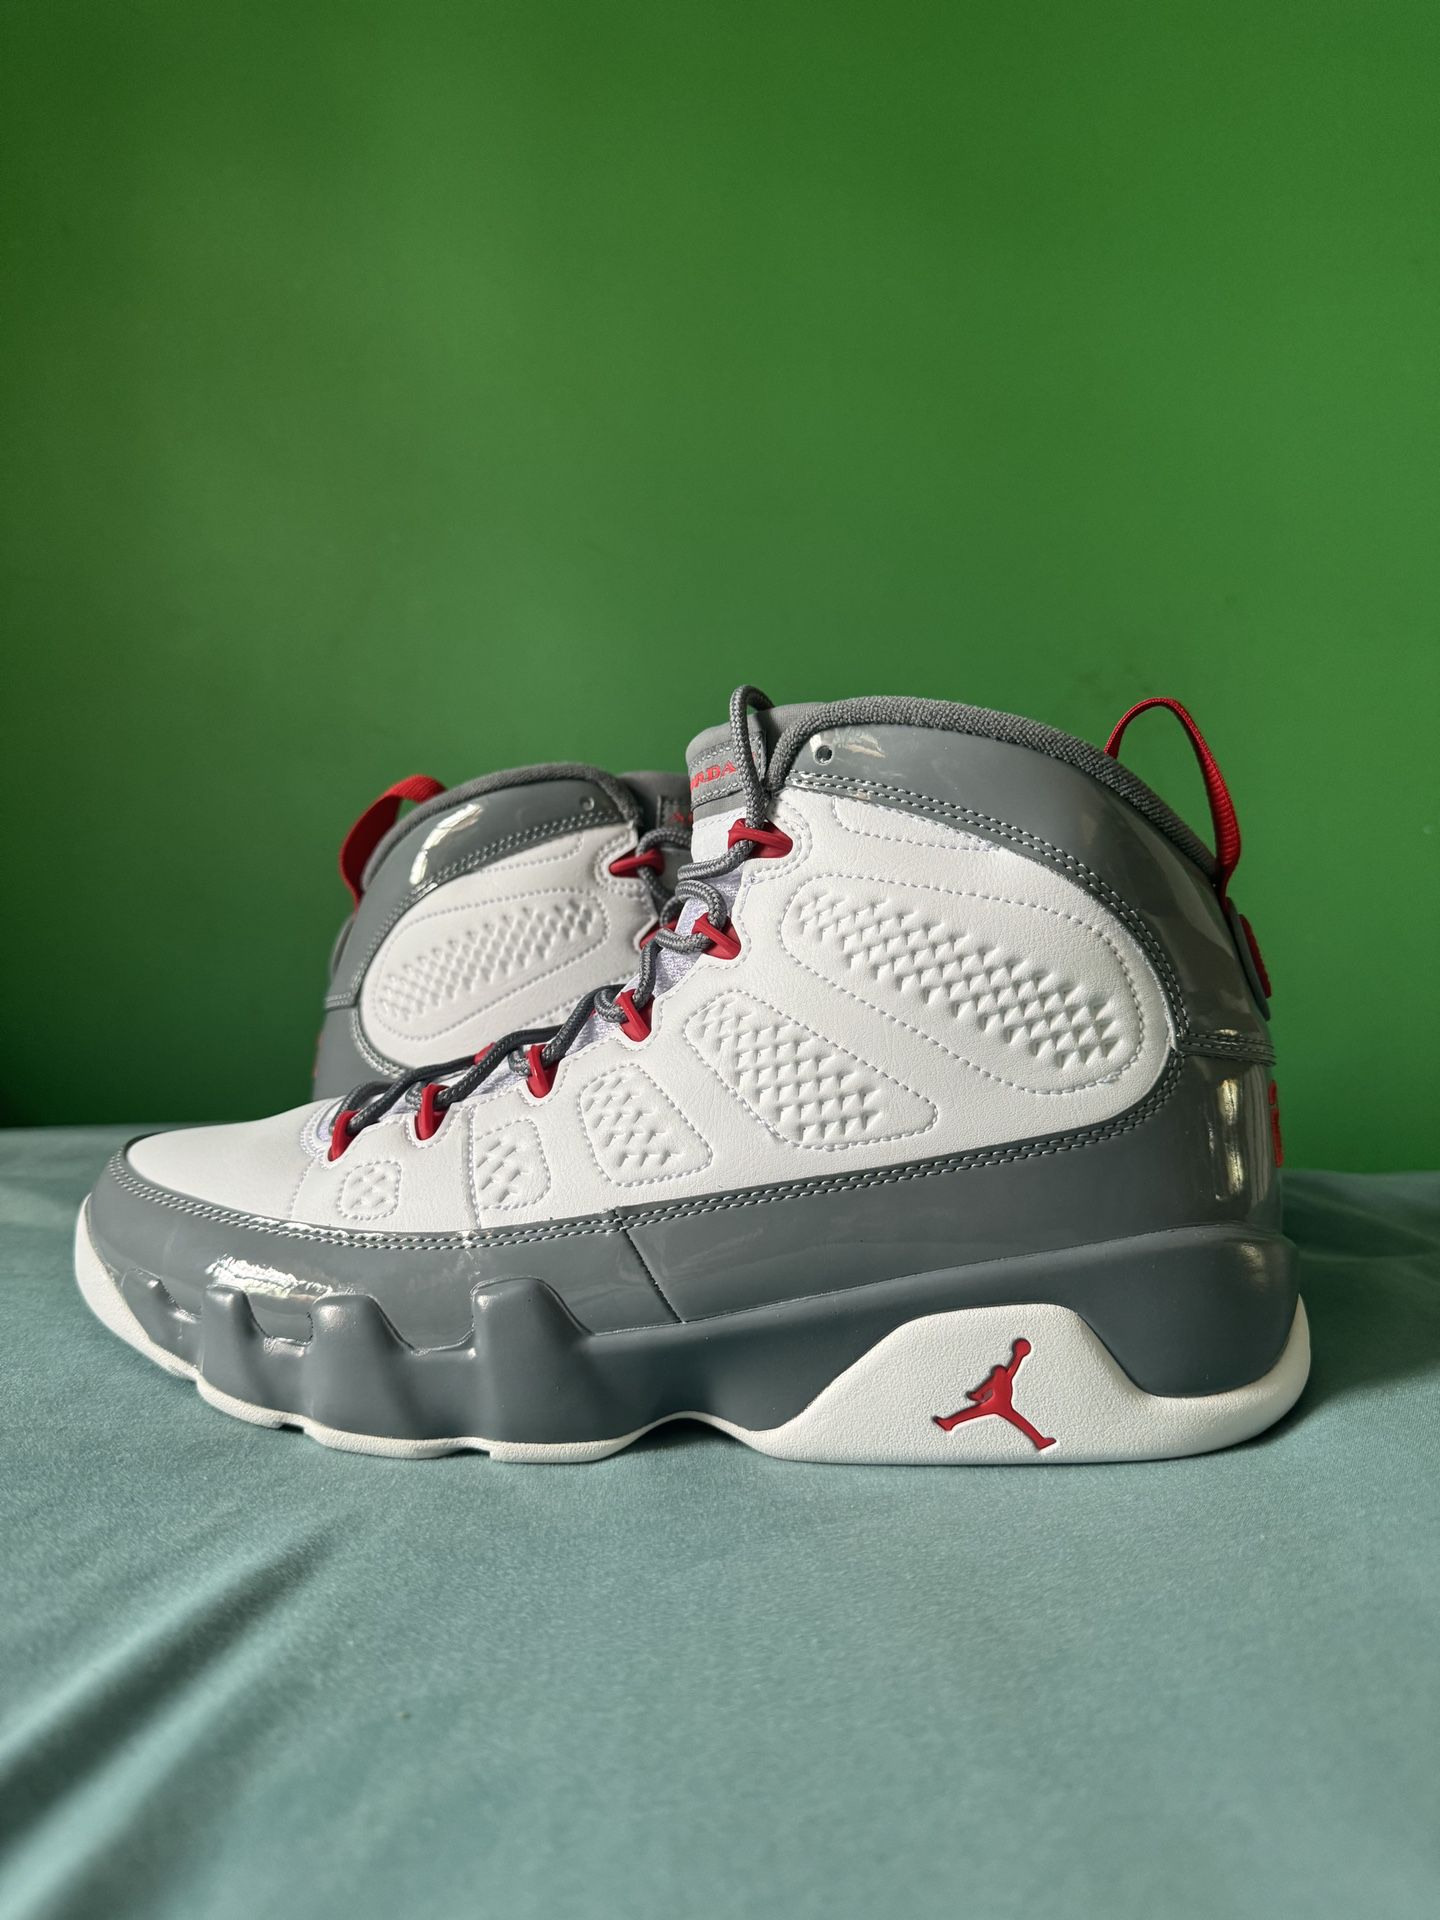 Nike Air Jordan 9 Fire Red Size 11